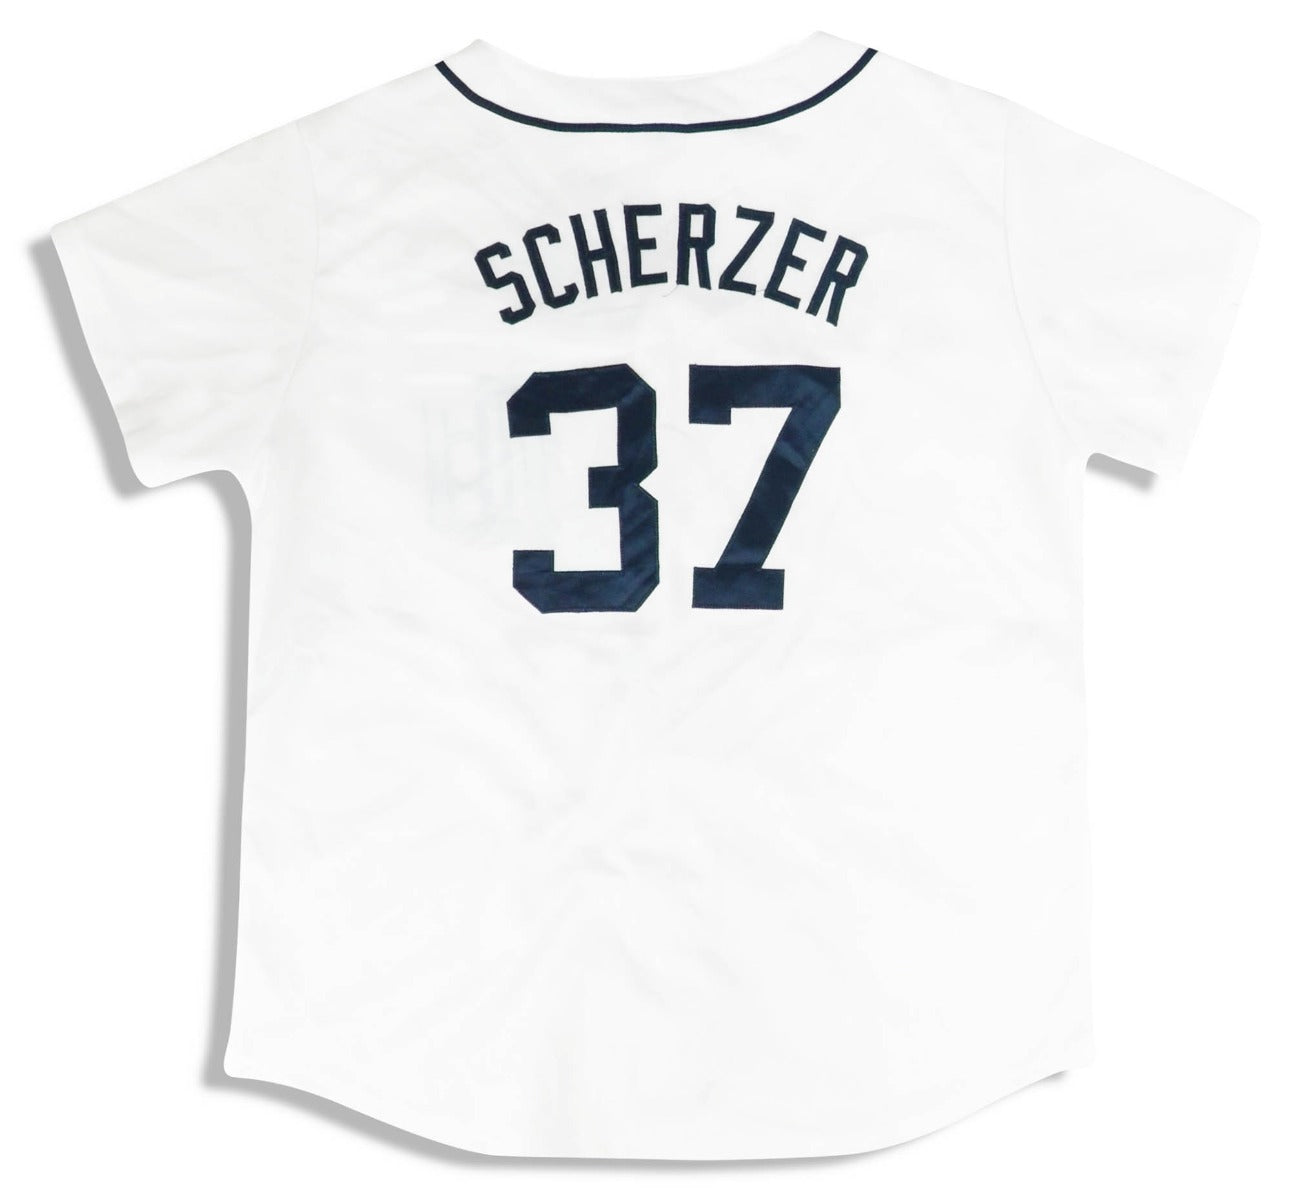 Max Scherzer Texas Rangers Nike Home Replica Player Jersey - White